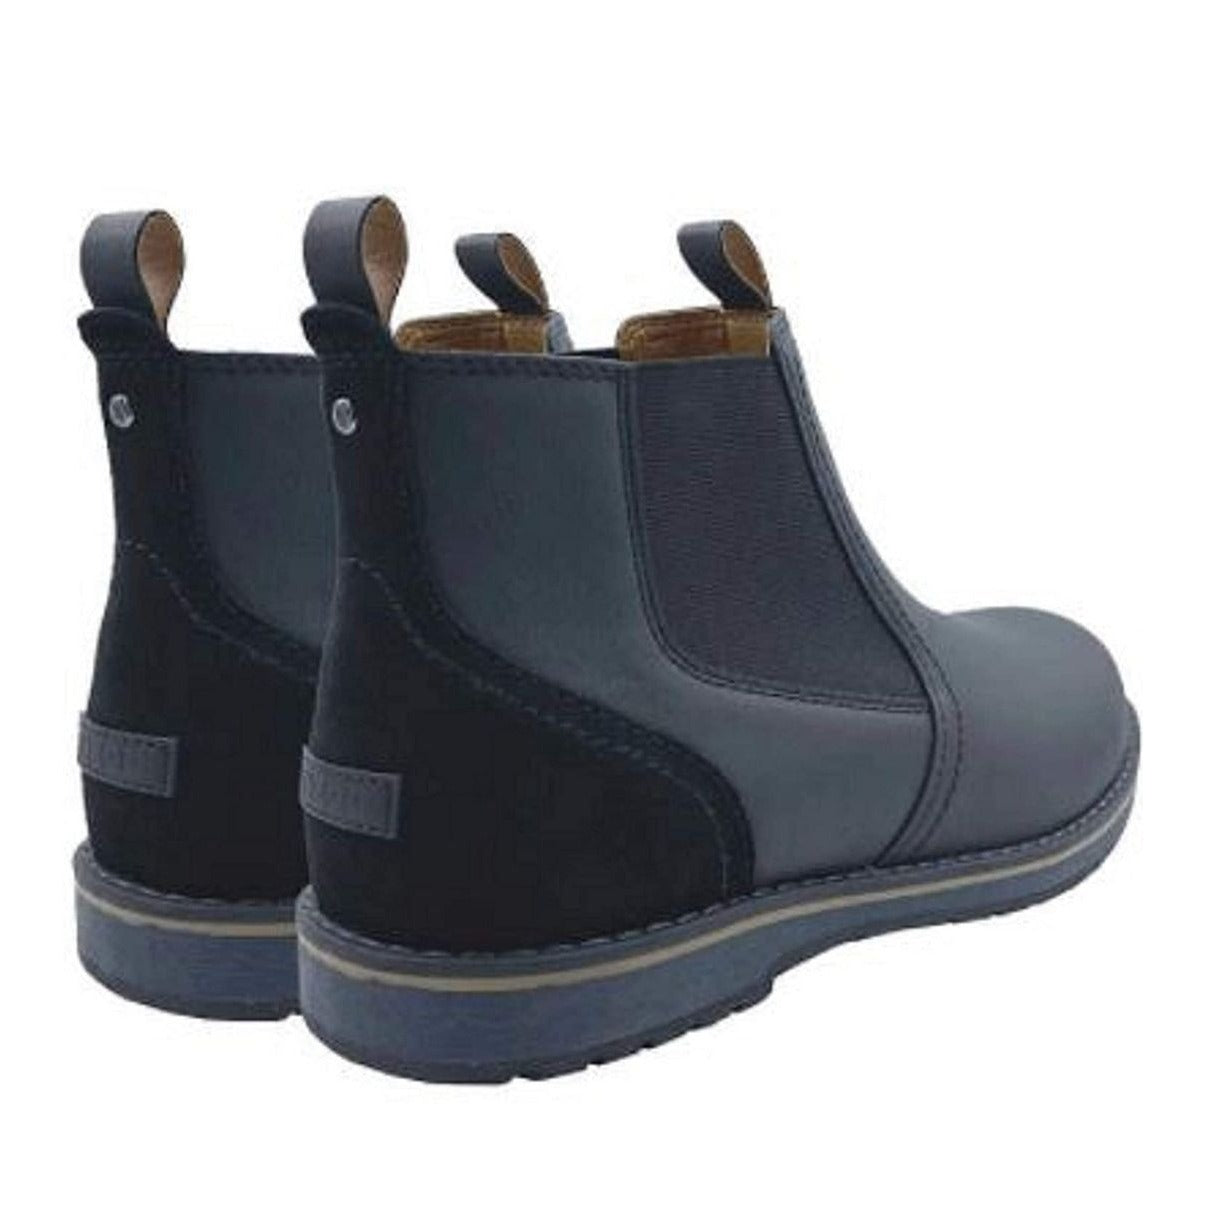 IZOD Boots Chukka Men's Black Buffed LEATHER Slip-on Shoes